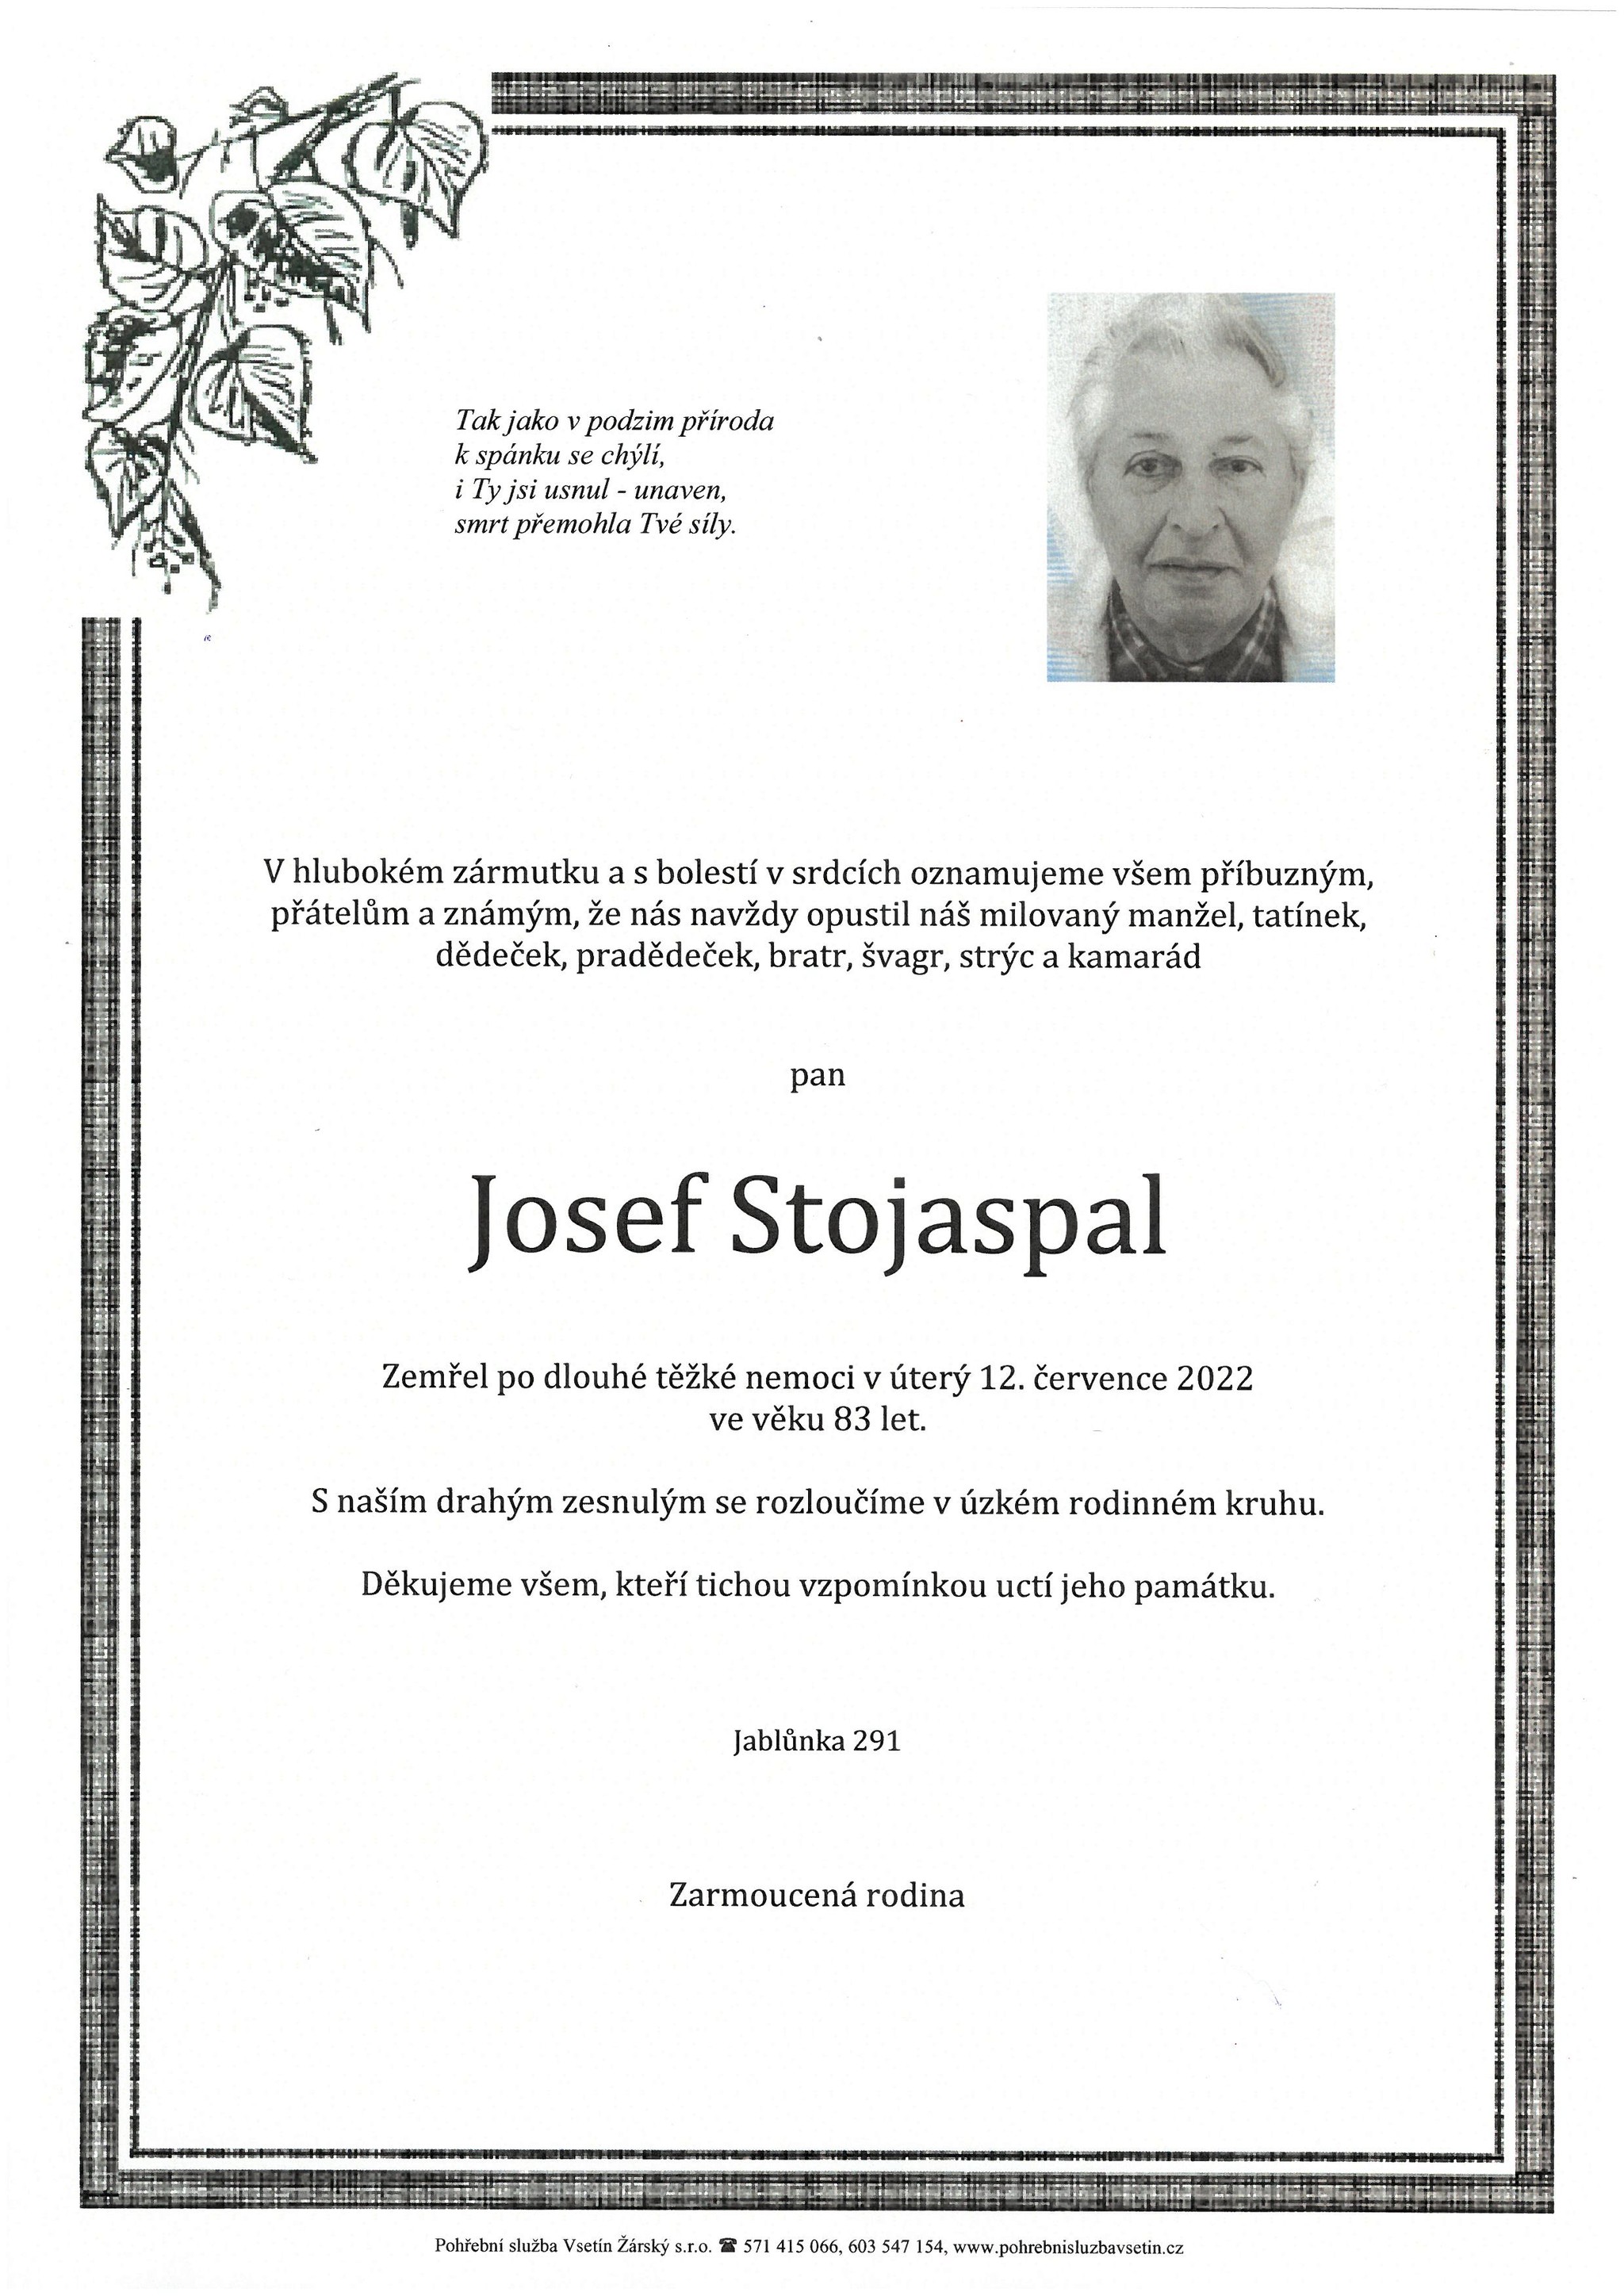 Josef Stojaspal